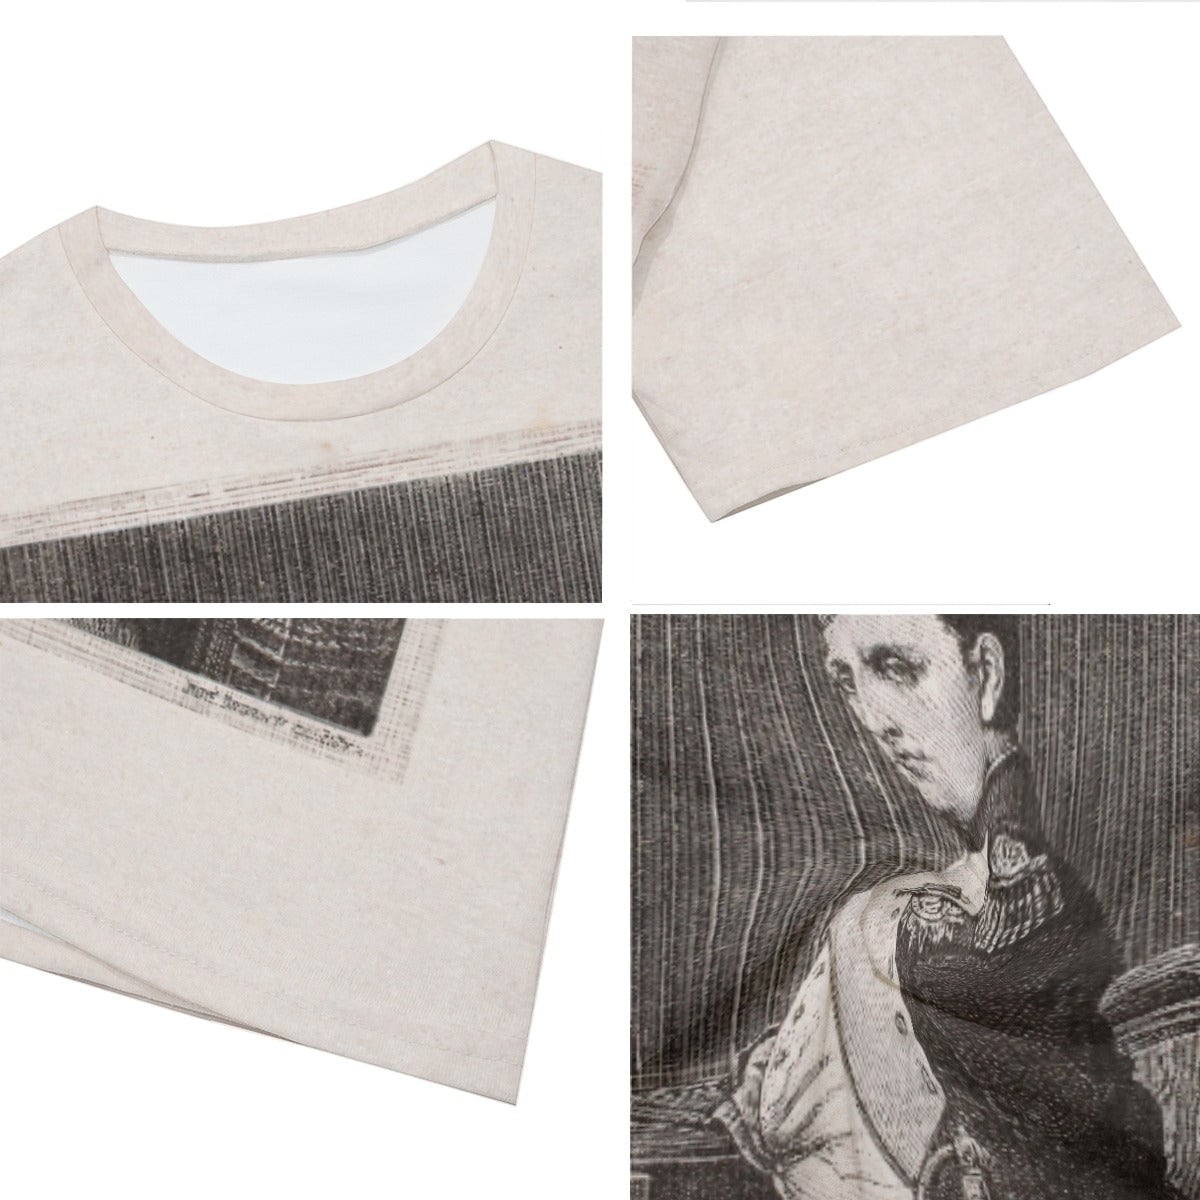 Napoleon Bonaparte French Emperor Portrait T-Shirt